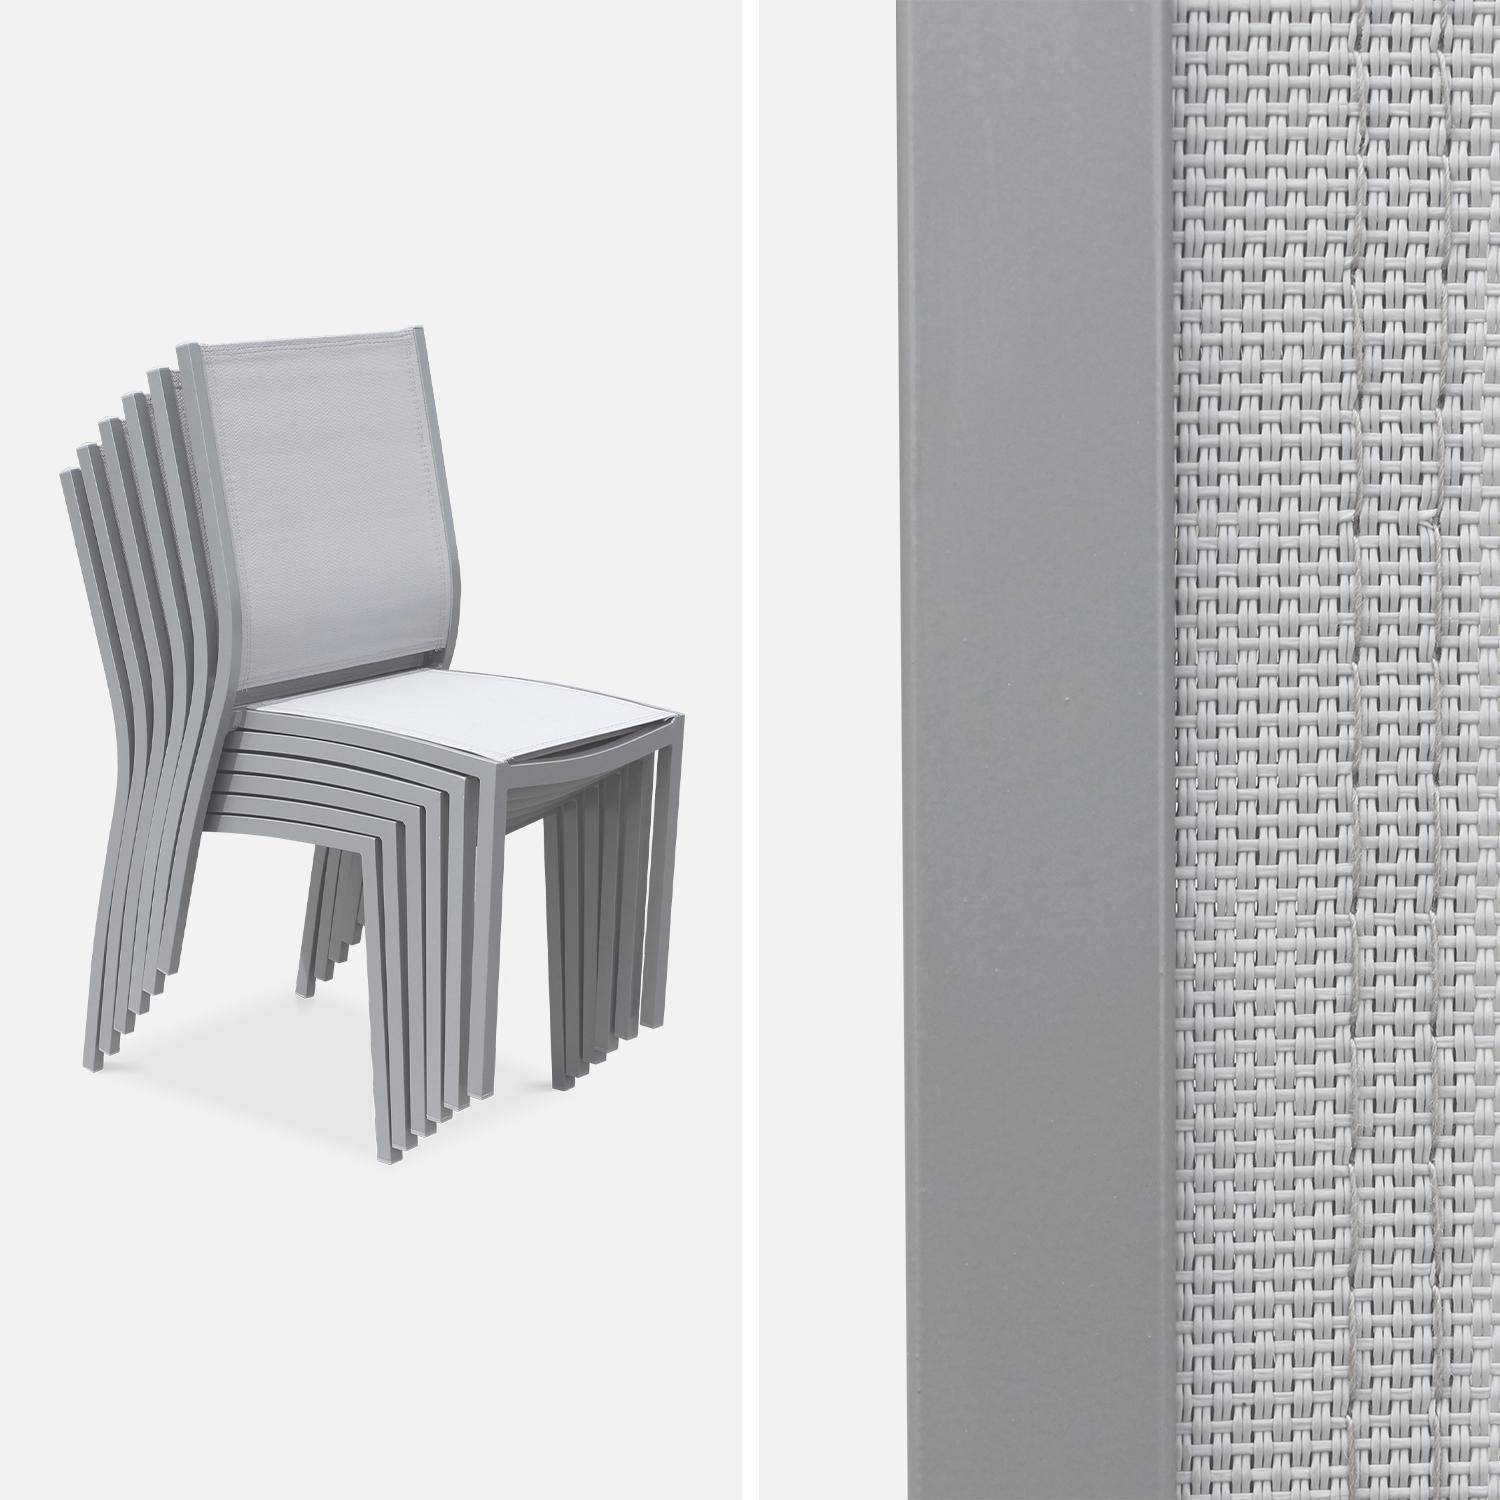 2er Set Gartenstühle - ORLANDO Farbe Grau / Hellgrau - Gestell aus Aluminum, Sitz aus Textilene, stapelbar Photo3